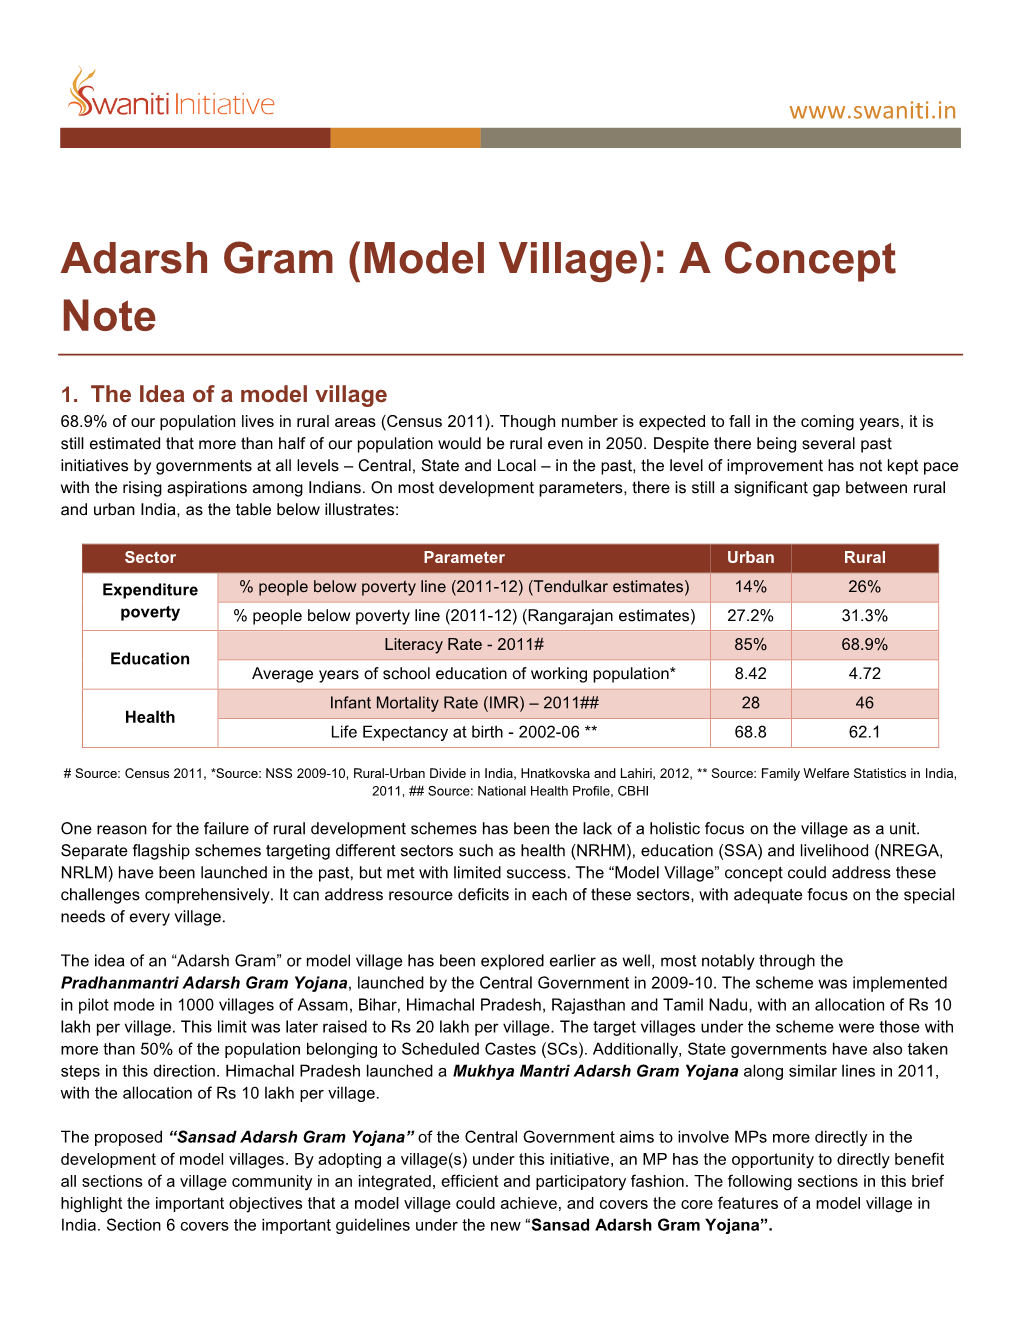 Adarsh Gram (Model Village): a Concept Note